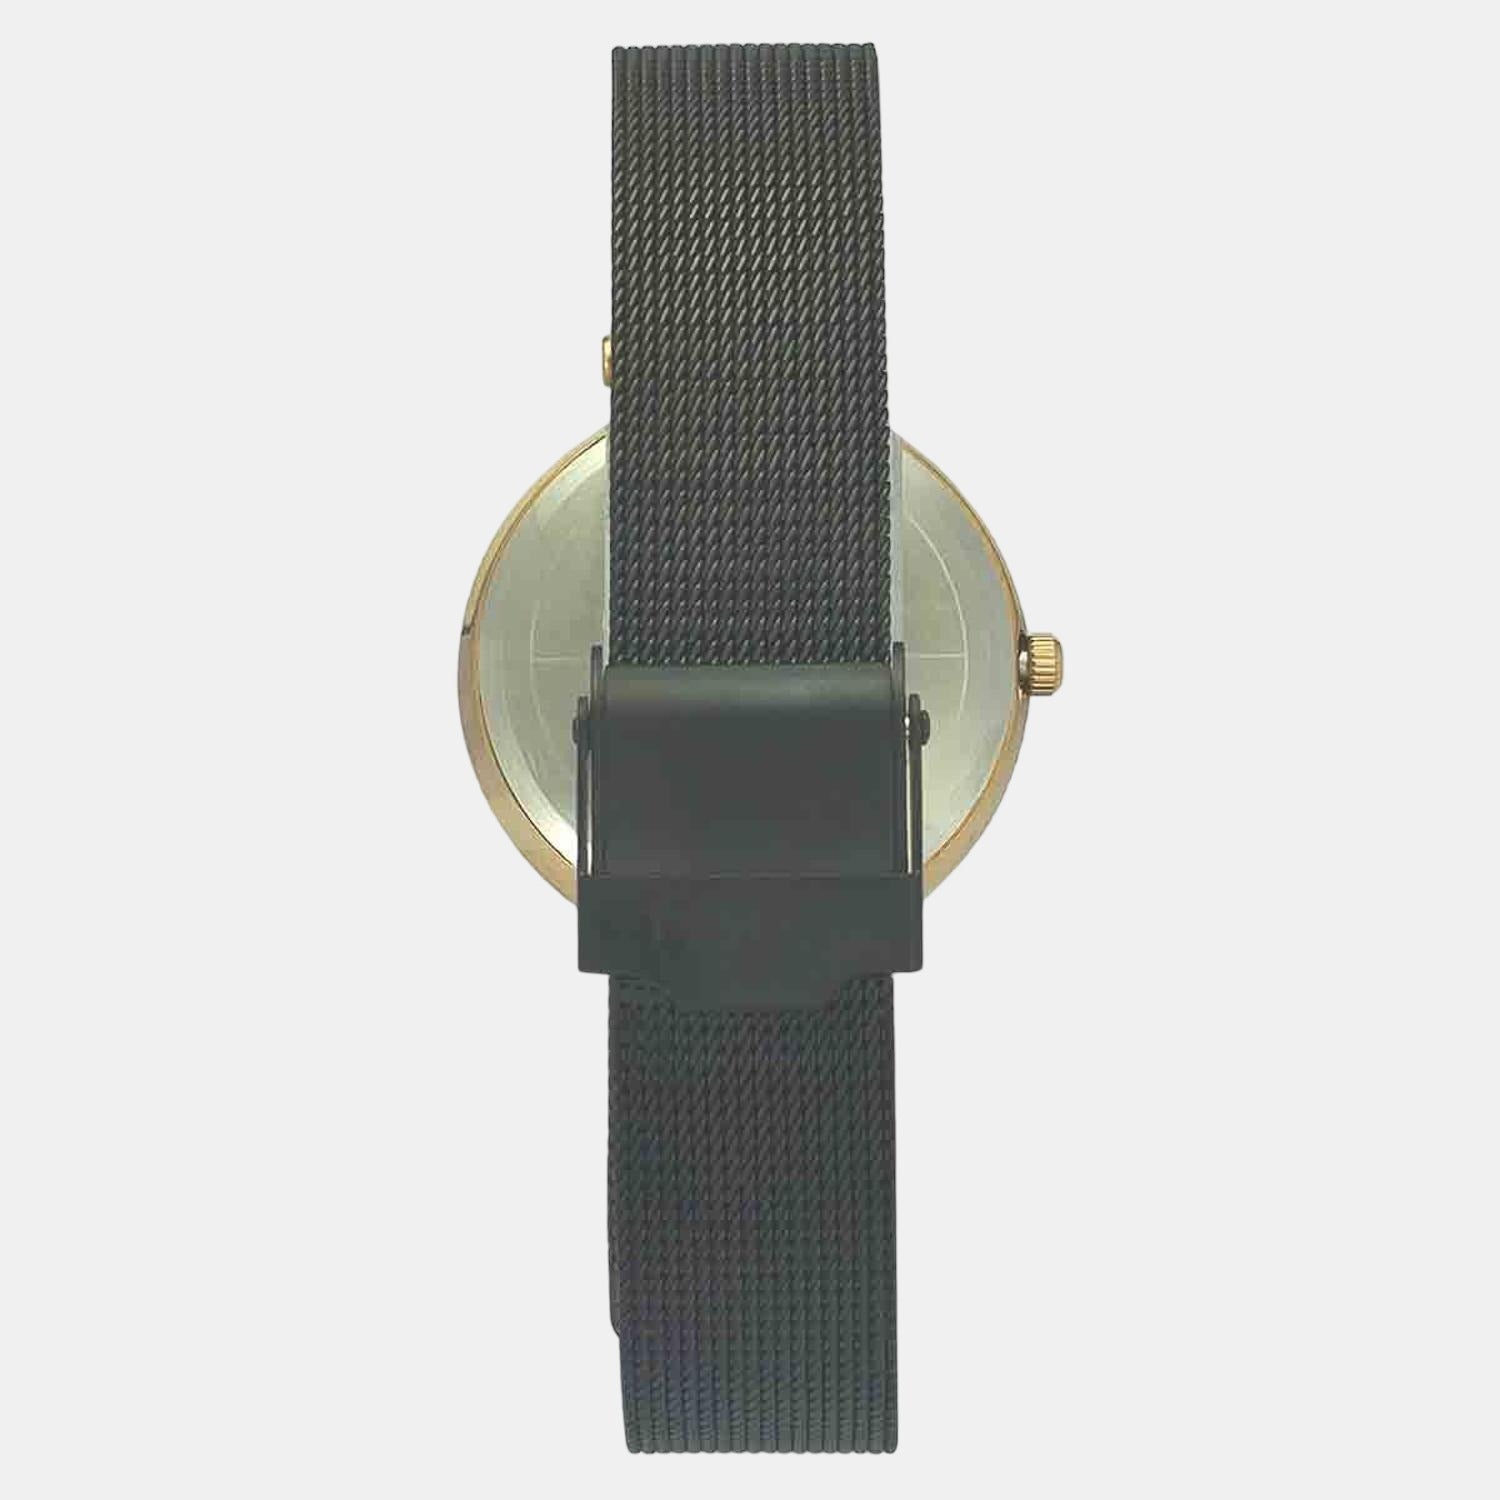 timex-black-analog-women-watch-twel11826